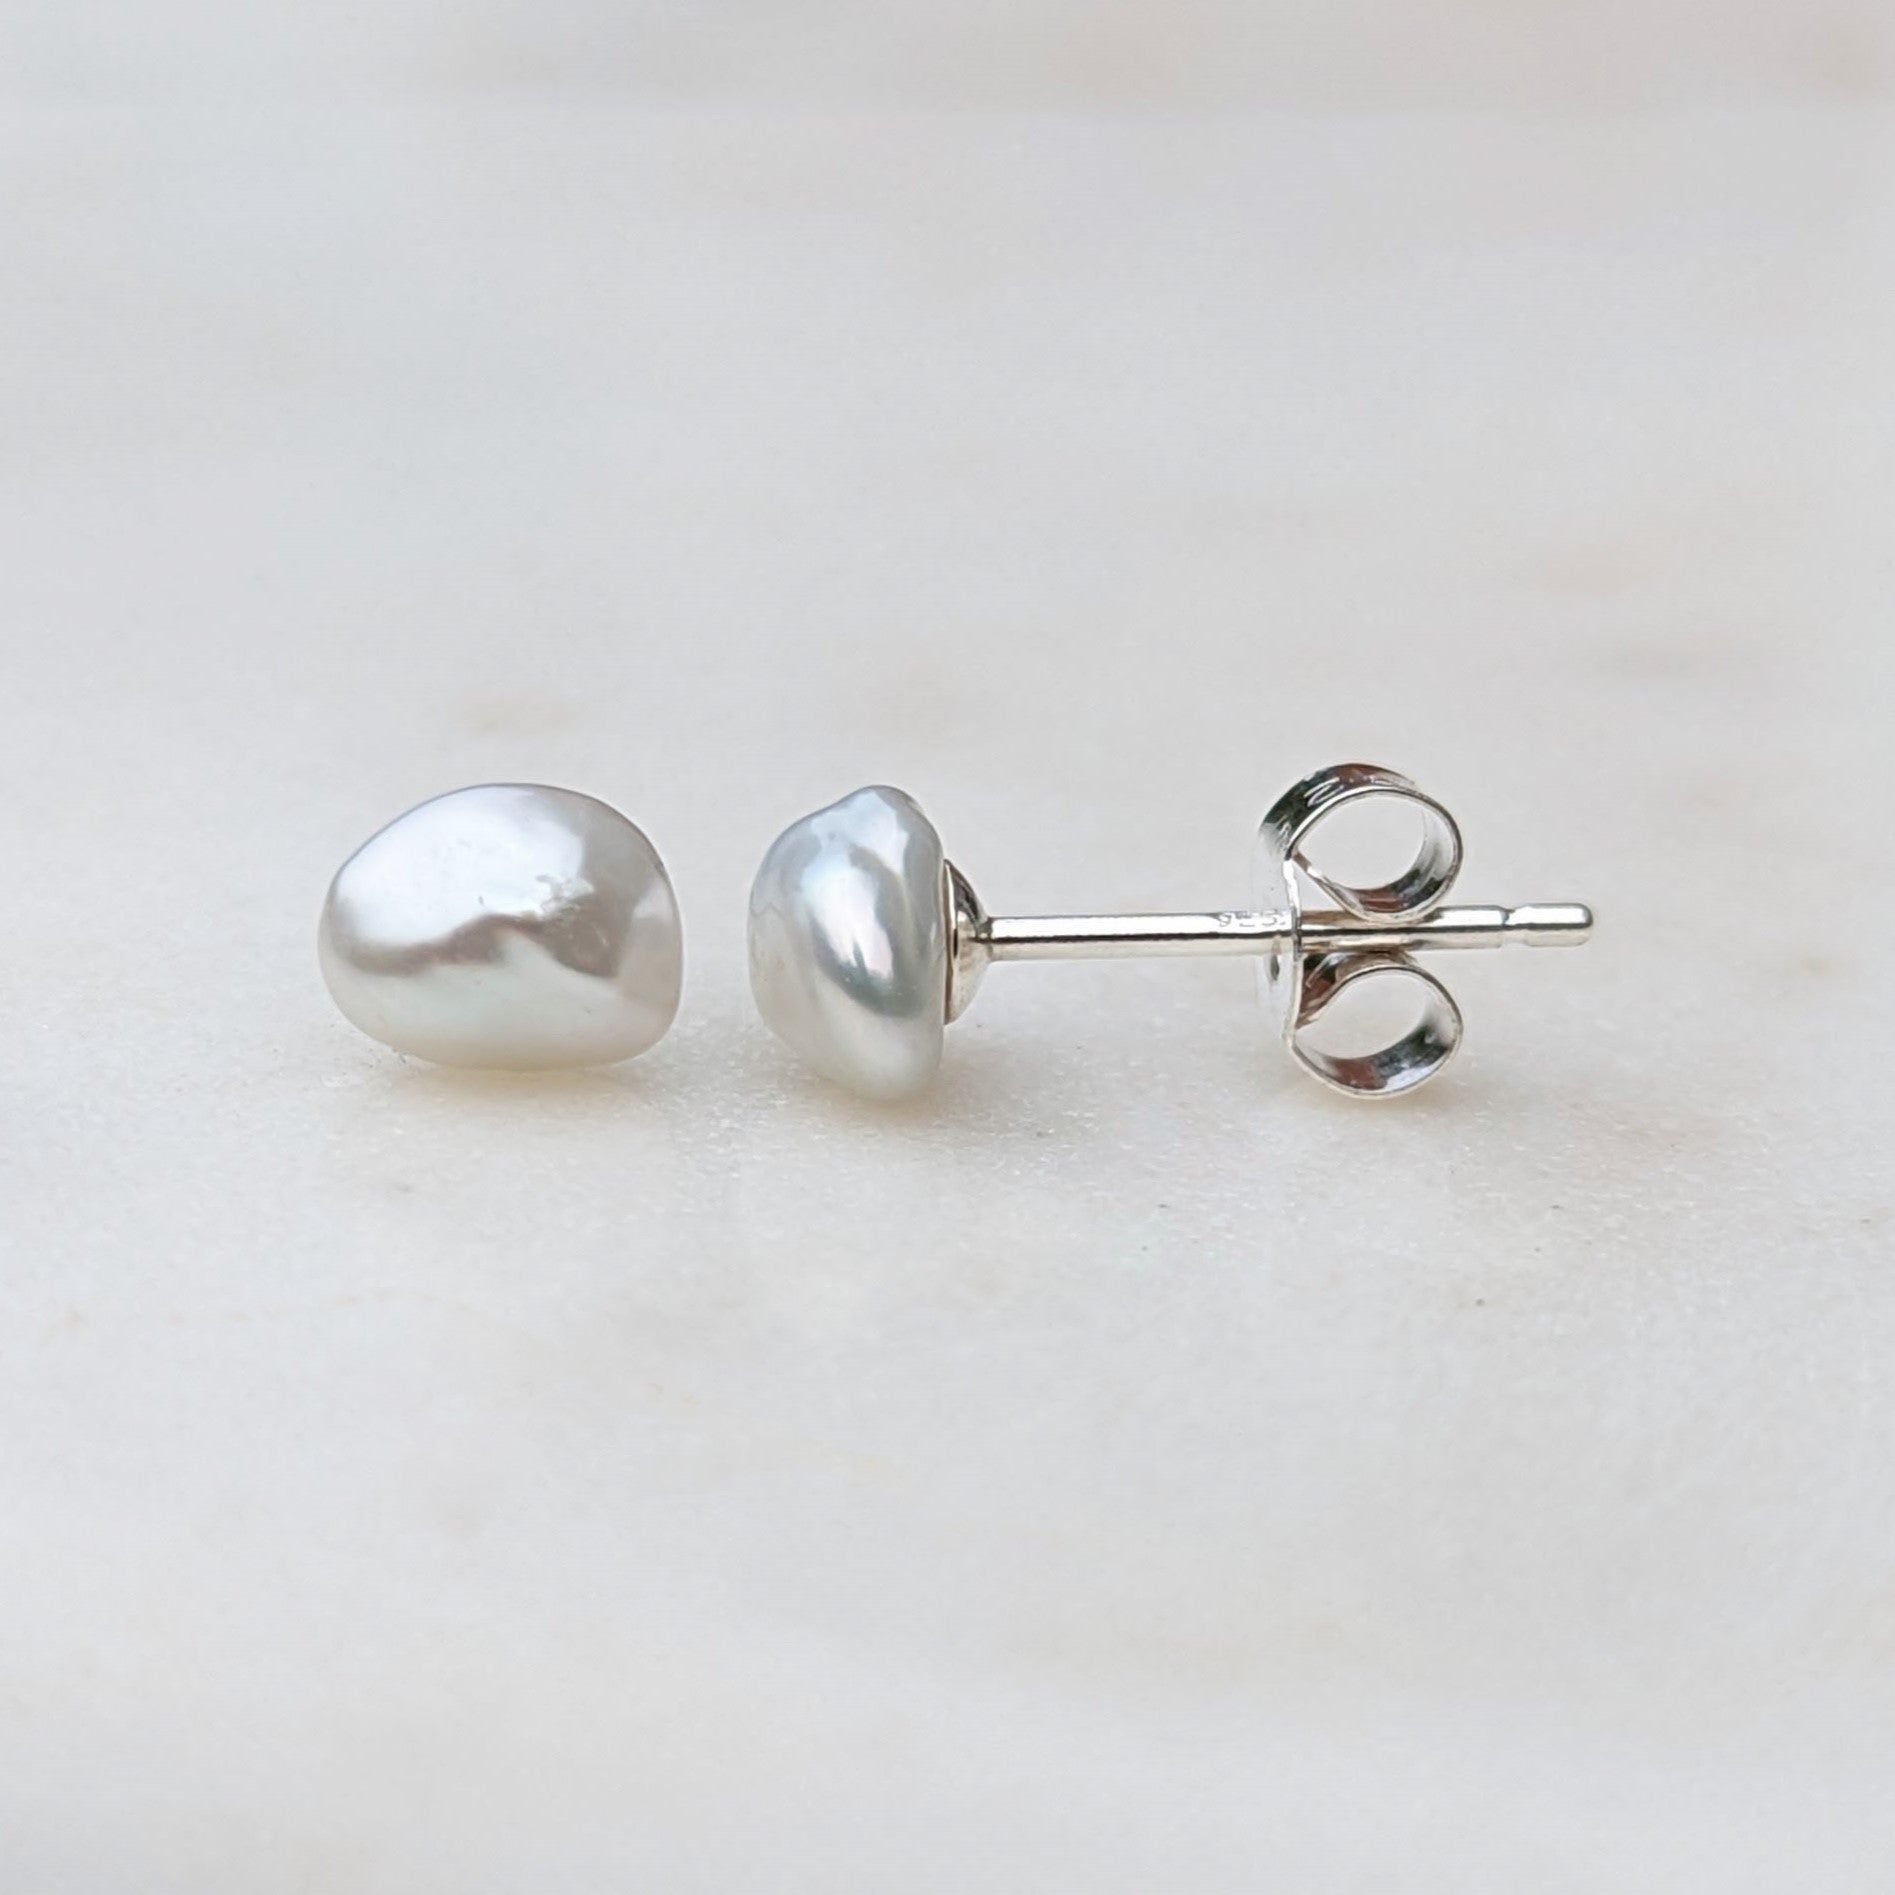 Small irregular shaped keshi pearl stud earrings in silver